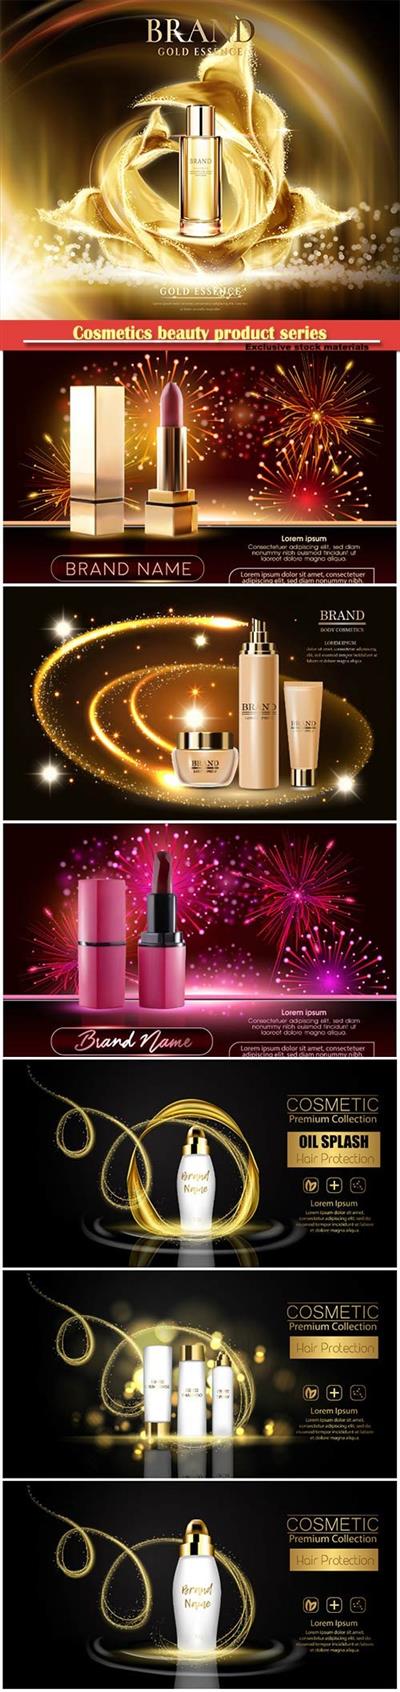 Cosmetics beauty product series, presentation banners mockup, vector illustration #2